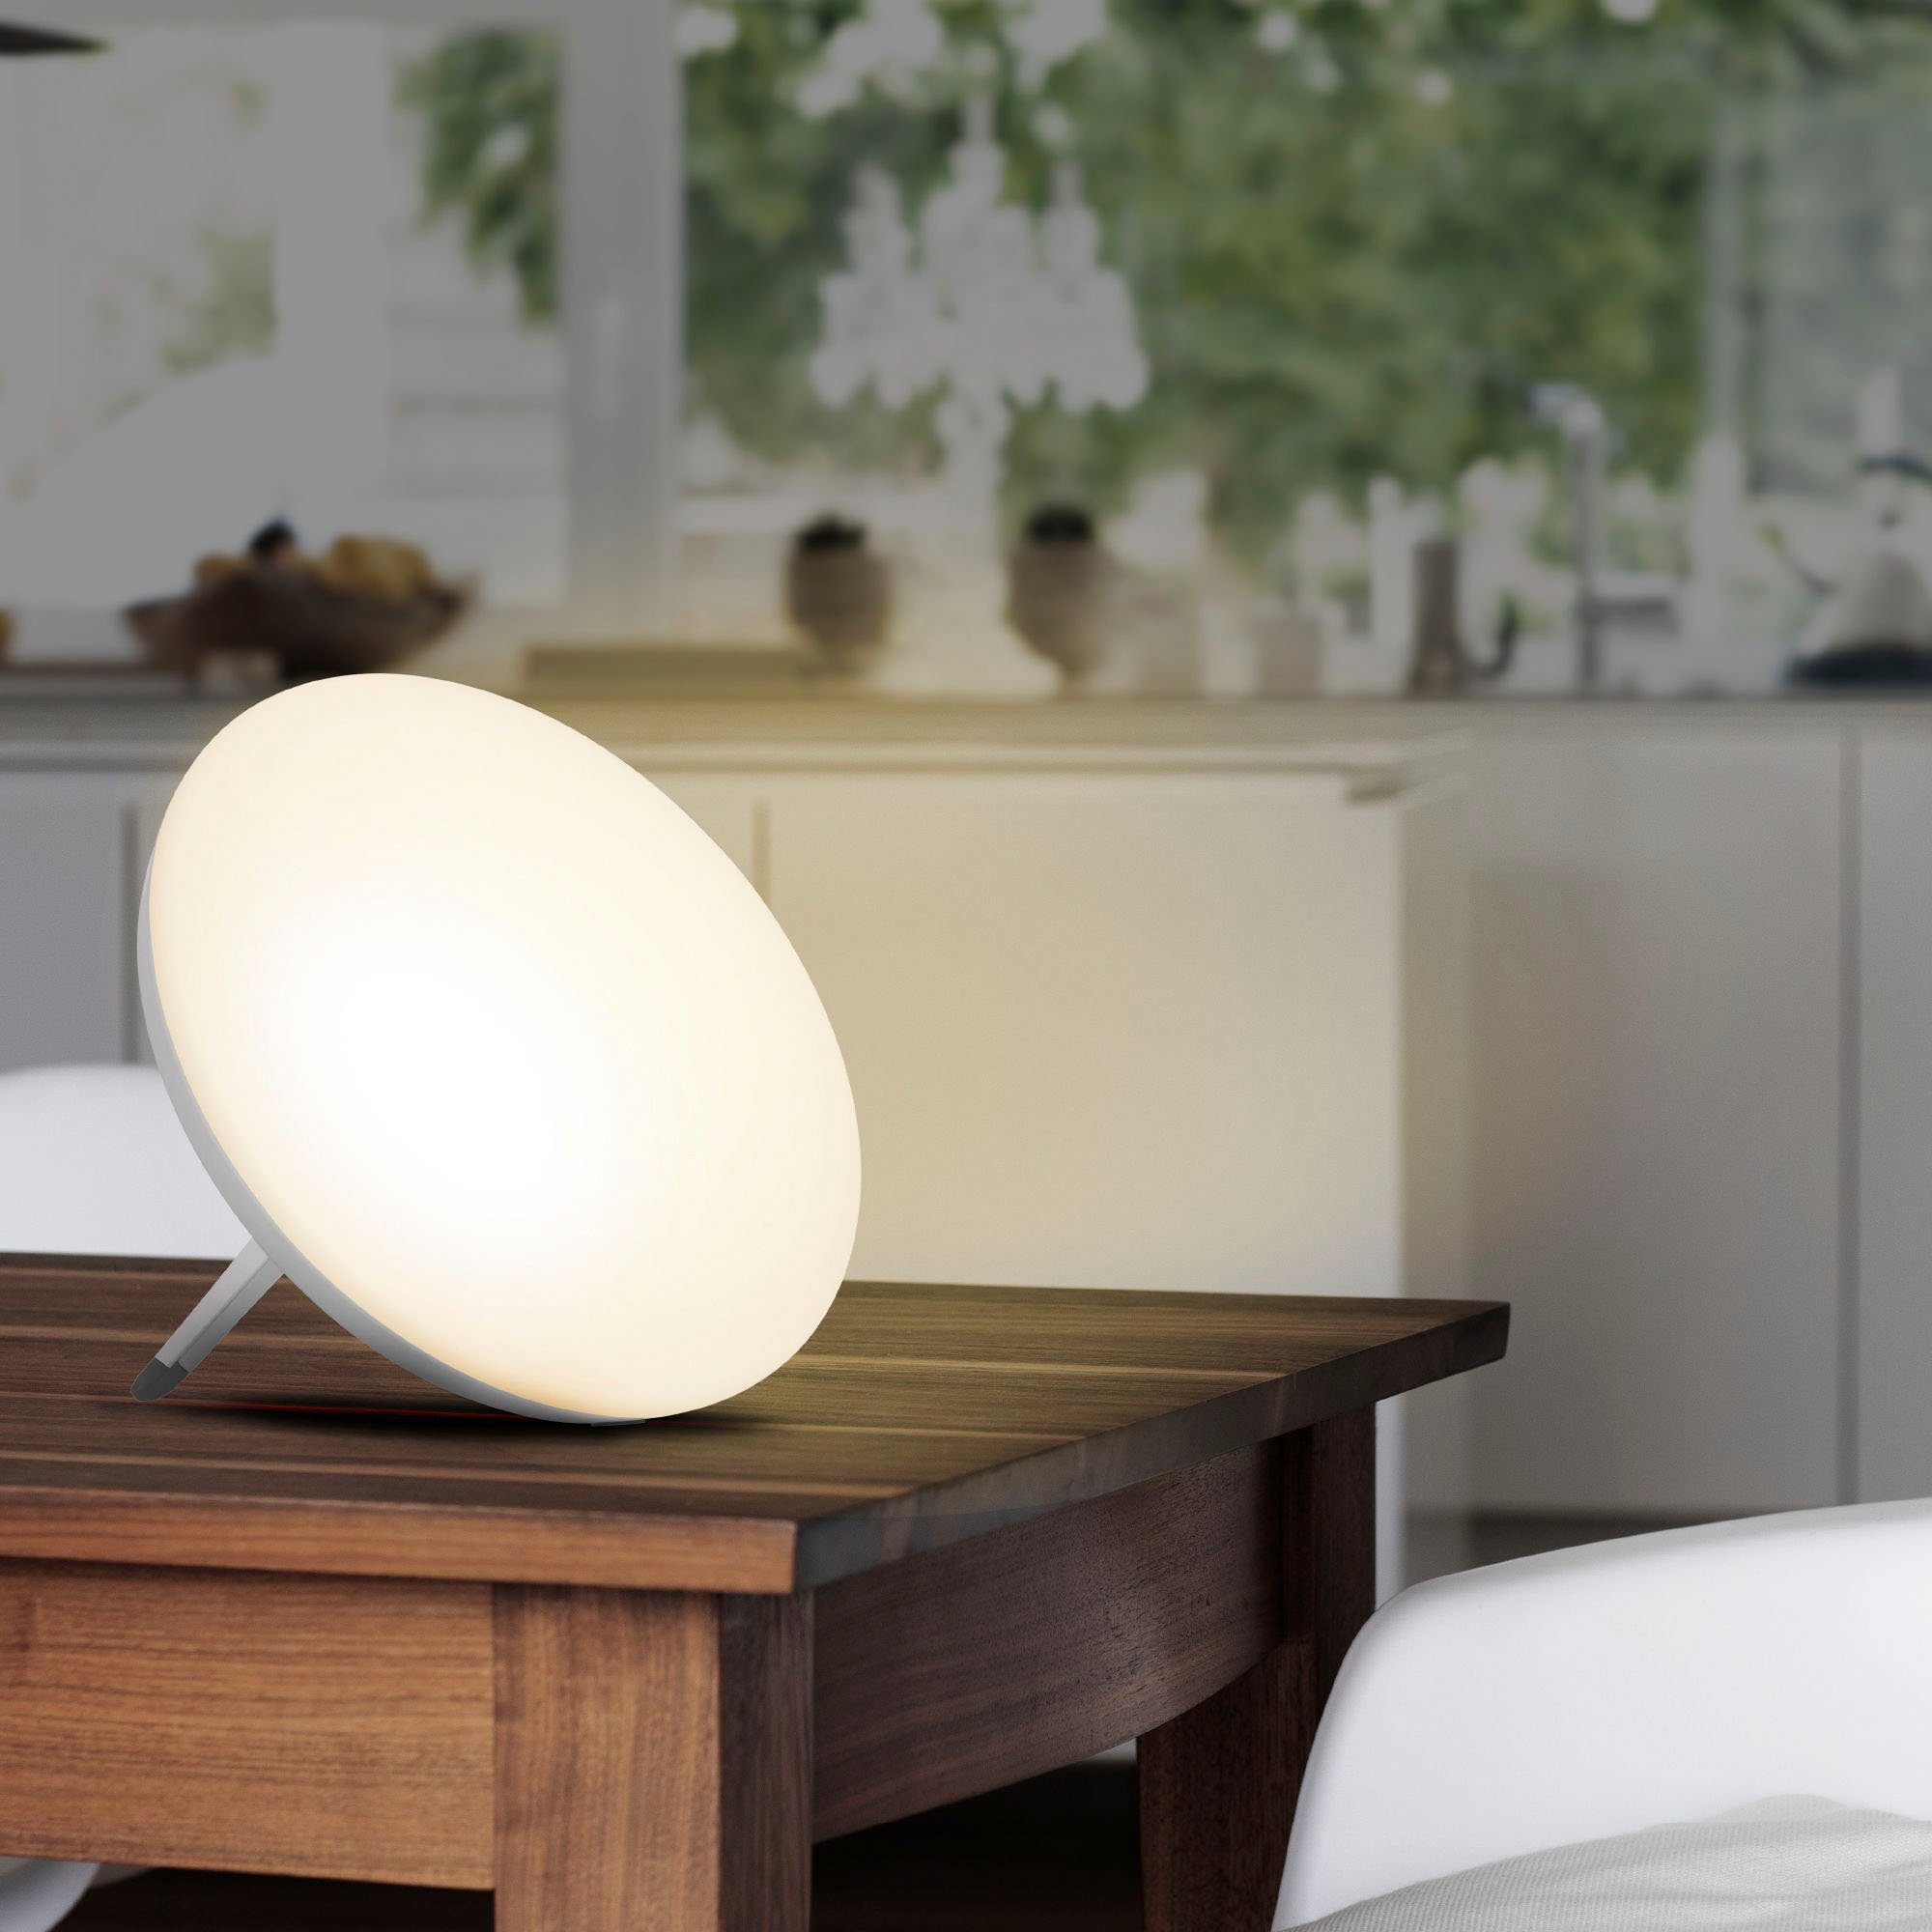 LT500, integriert, Tageslichtlampe LED Medisana Warmweiß Farbwechsel, fest